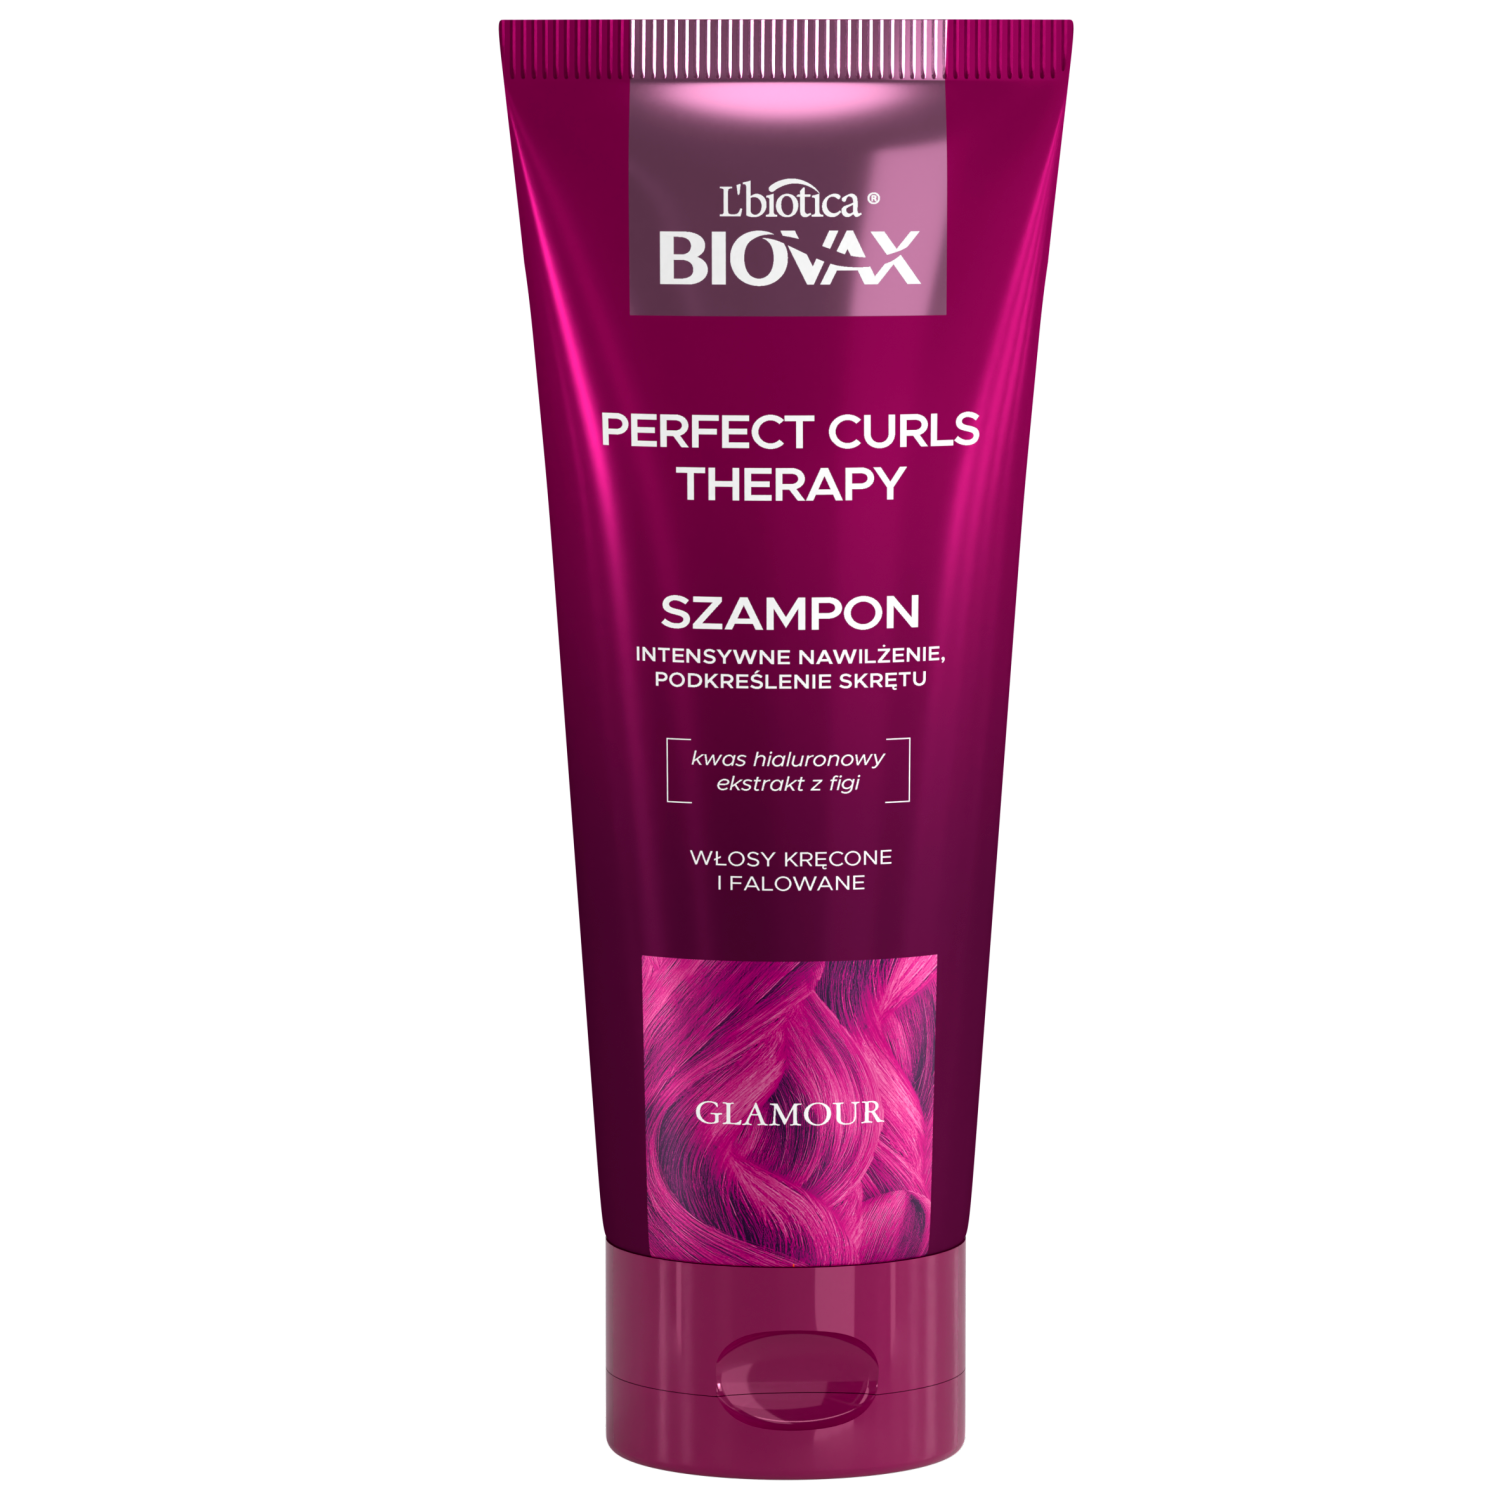 Увлажняющий шампунь для вьющихся волос Biovax Glamour Perfect Curls Therapy, 200 мл